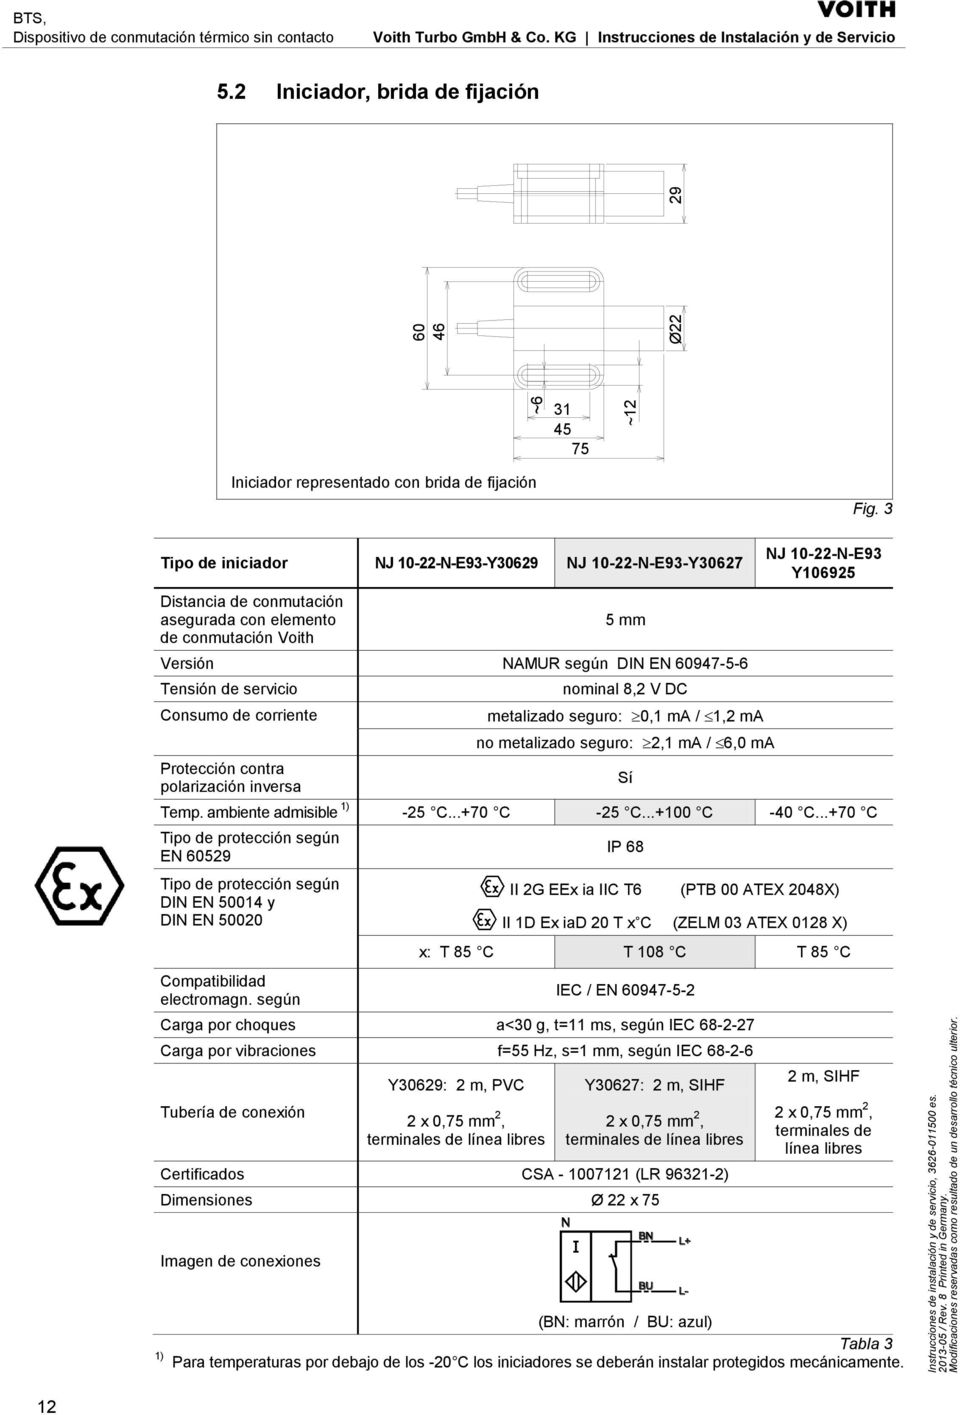 Consumo de corriente Protección contra polarización inversa nominal 8,2 V DC metalizado seguro: 0,1 ma / 1,2 ma no metalizado seguro: 2,1 ma / 6,0 ma Sí NJ 10-22-N-E93 Y106925 Temp.